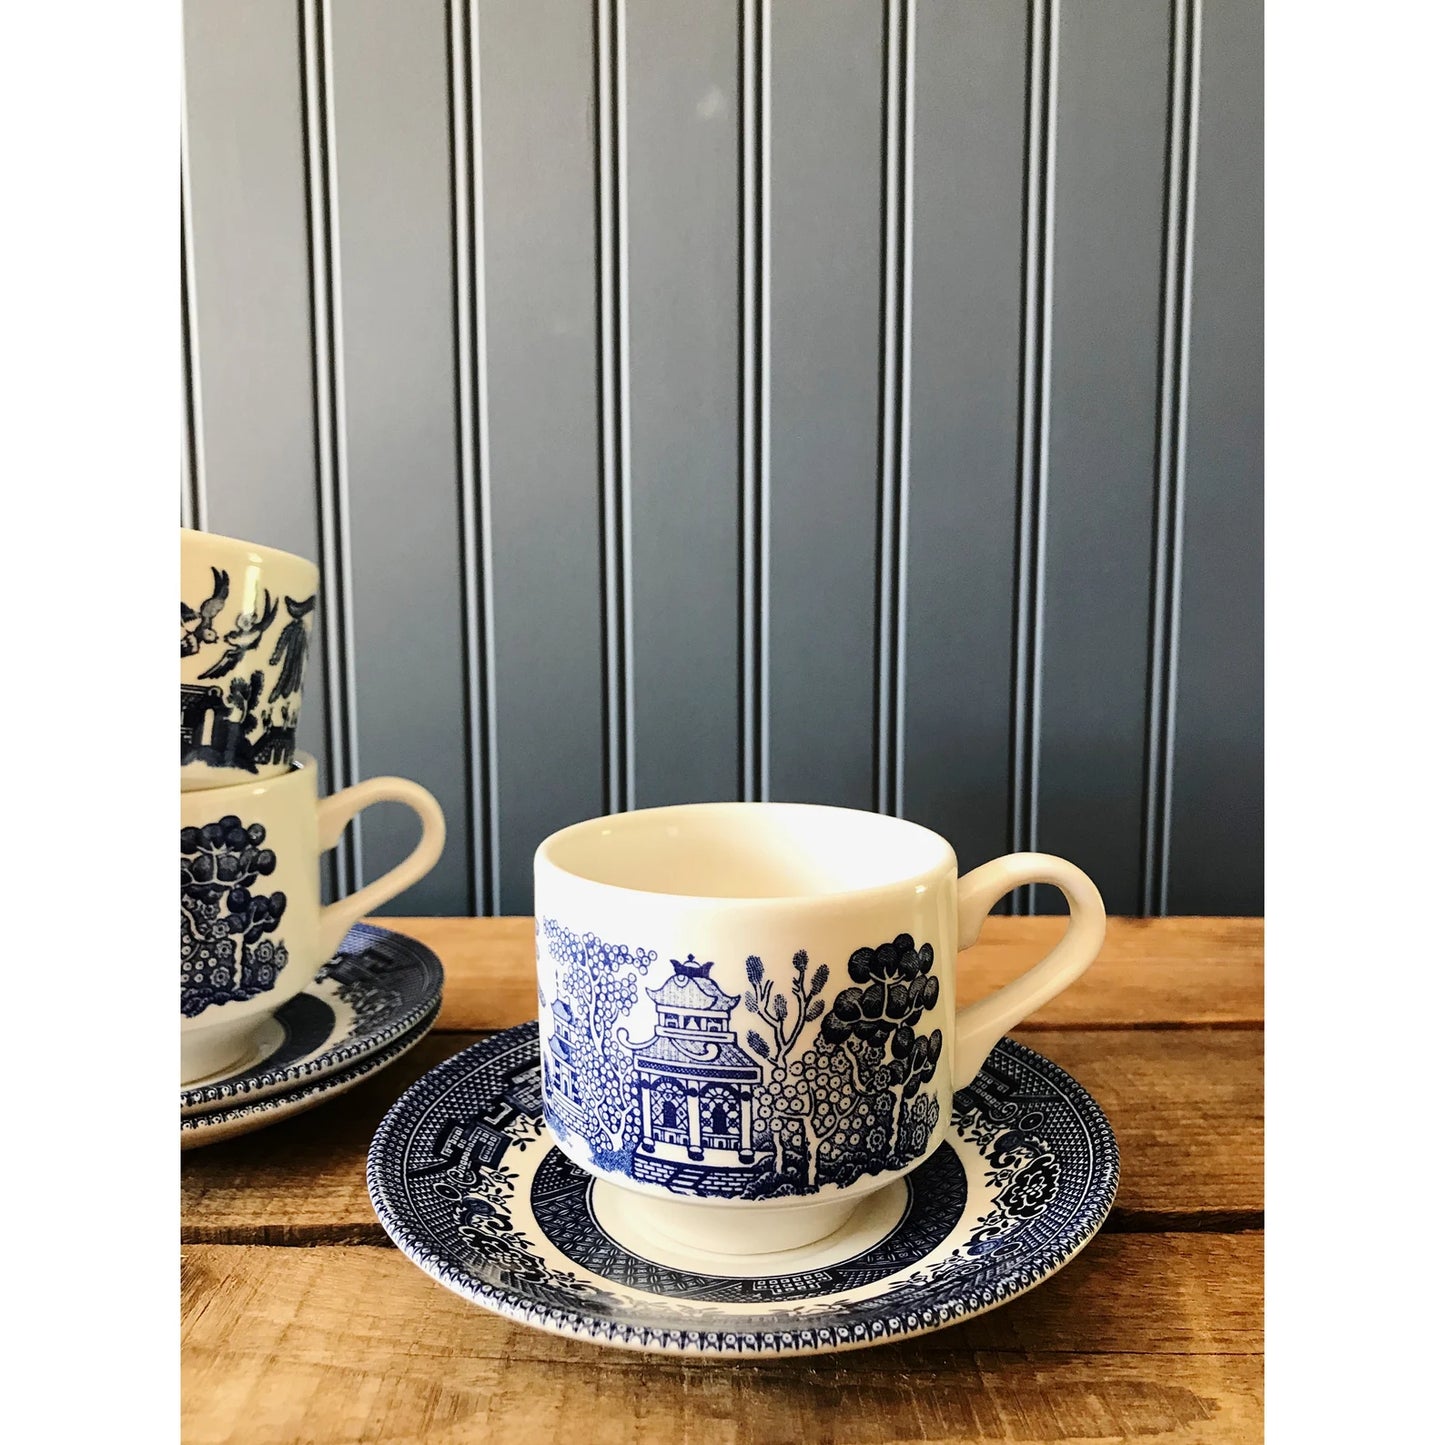 Vintage Churchill England Blue Willow Tea Cup & Saucer Set